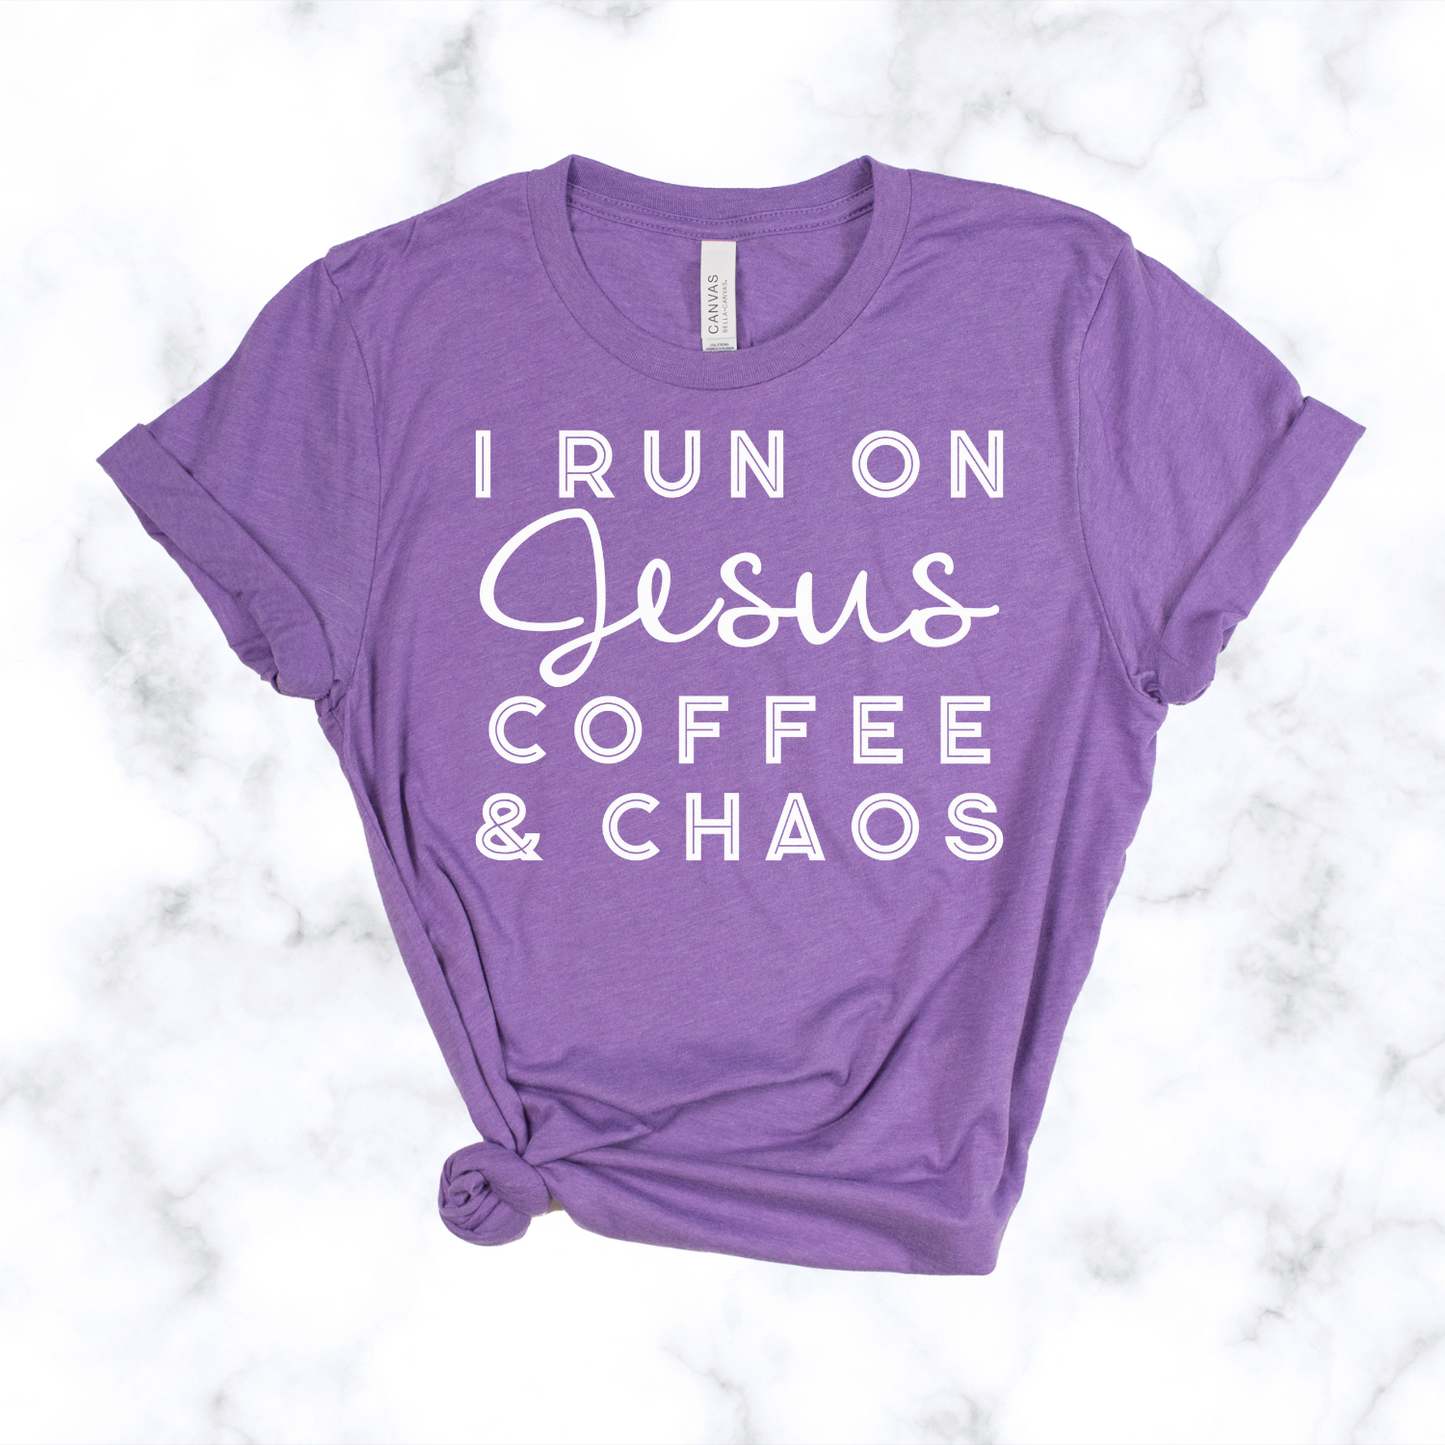 Jesus + Coffee + Chaos